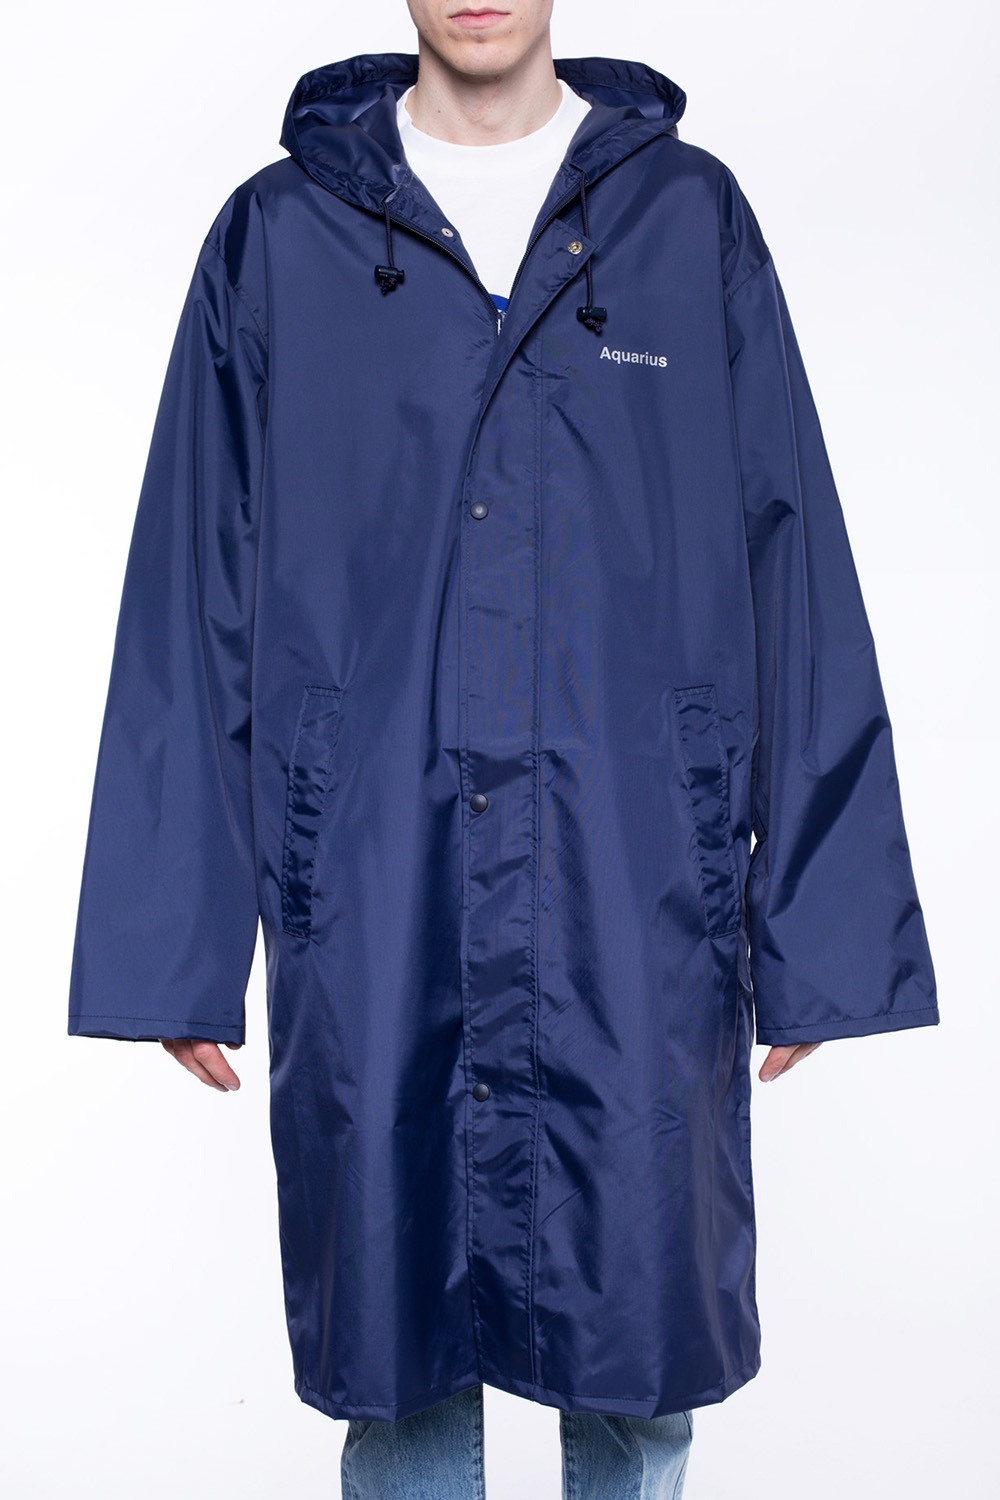 VETEMENTS Aquarius horoscope motif raincoat | Men's Clothing | Vitkac